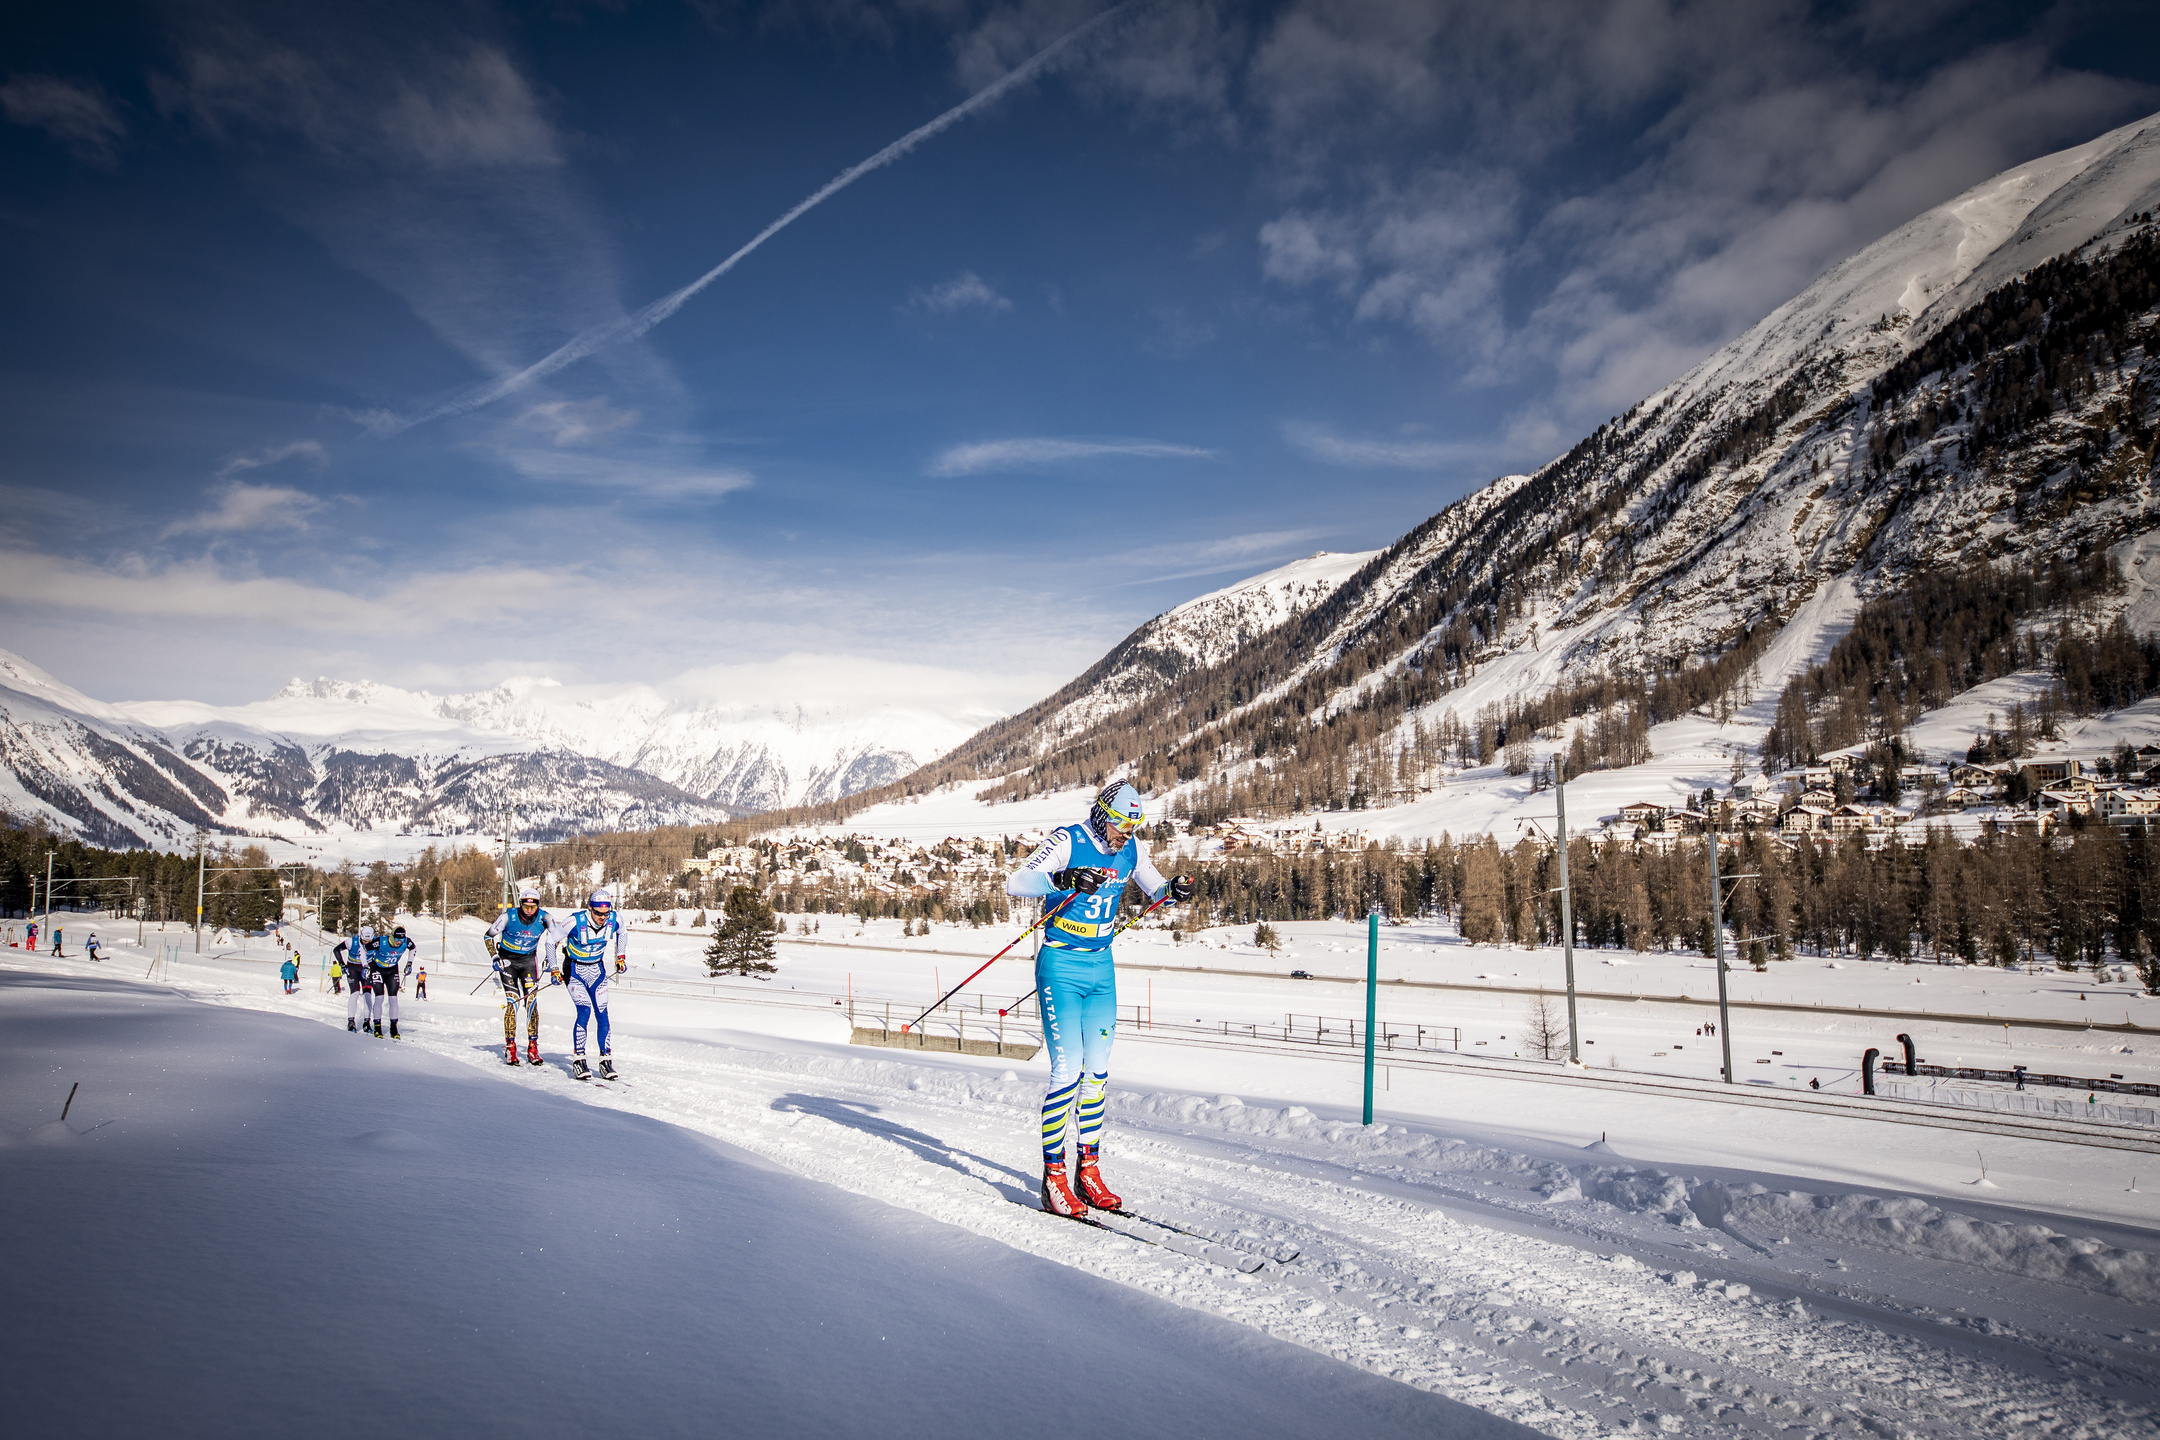 Calendrier Ski De Fond 2021 Ski de fond   Ski Classics   Le calendrier 2021   Sports Infos 